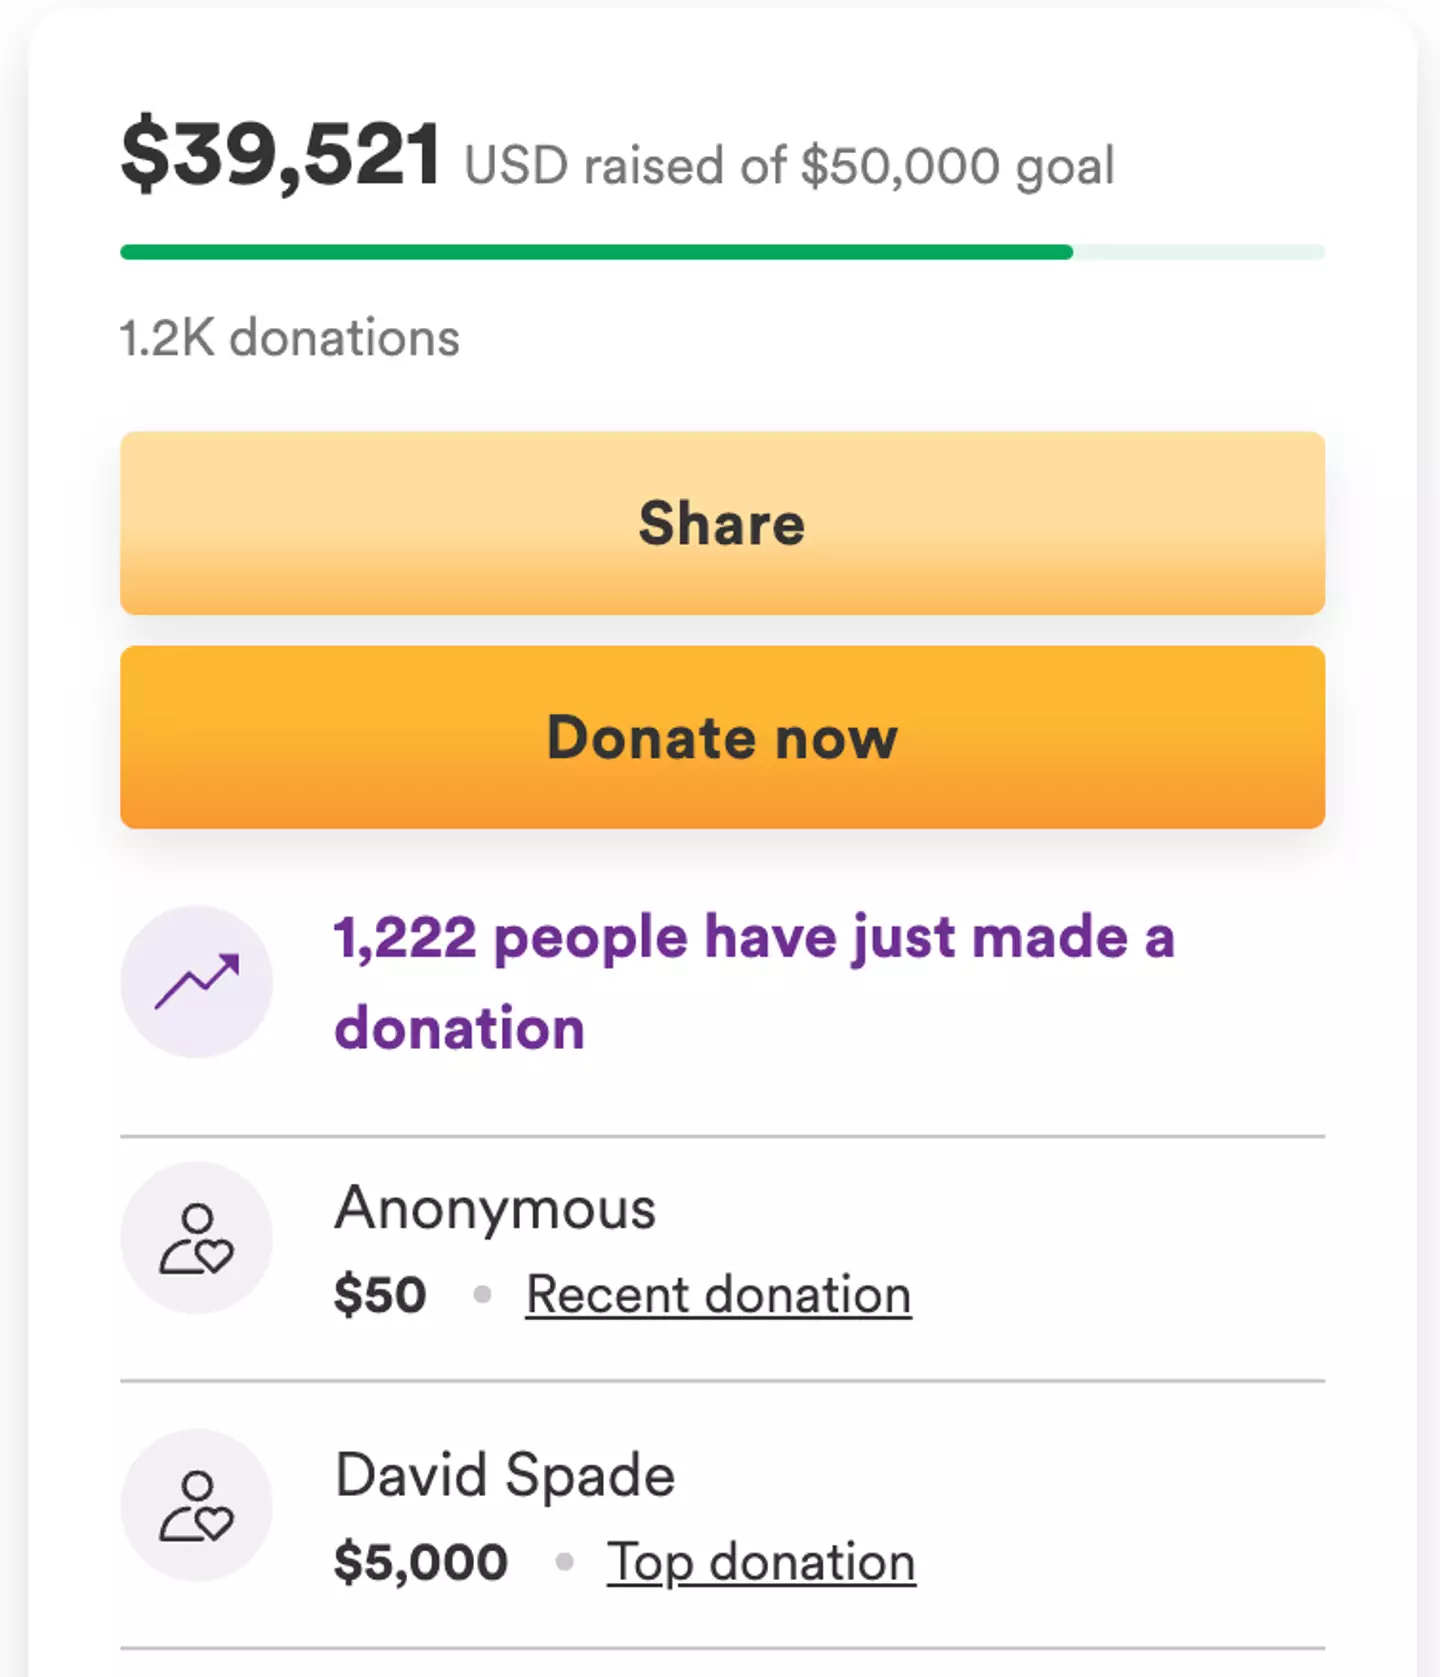 David Spade made a very generous donation.